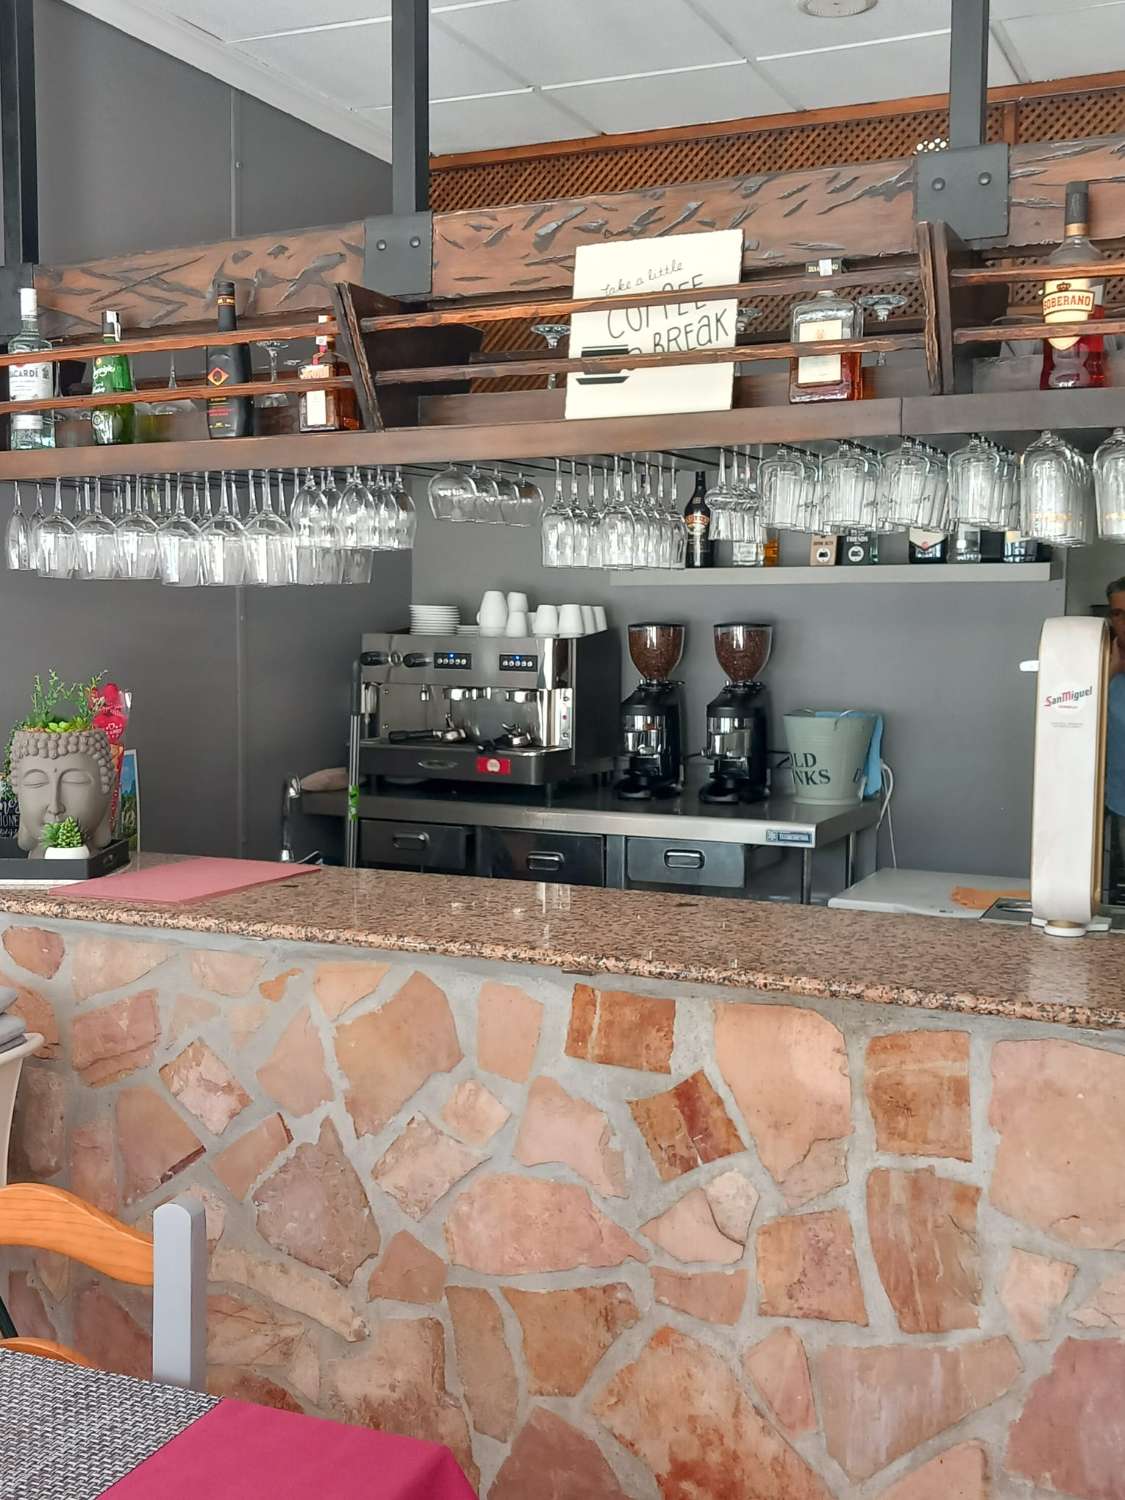 Bar-Restaurant im Bereich des Hotel Riu